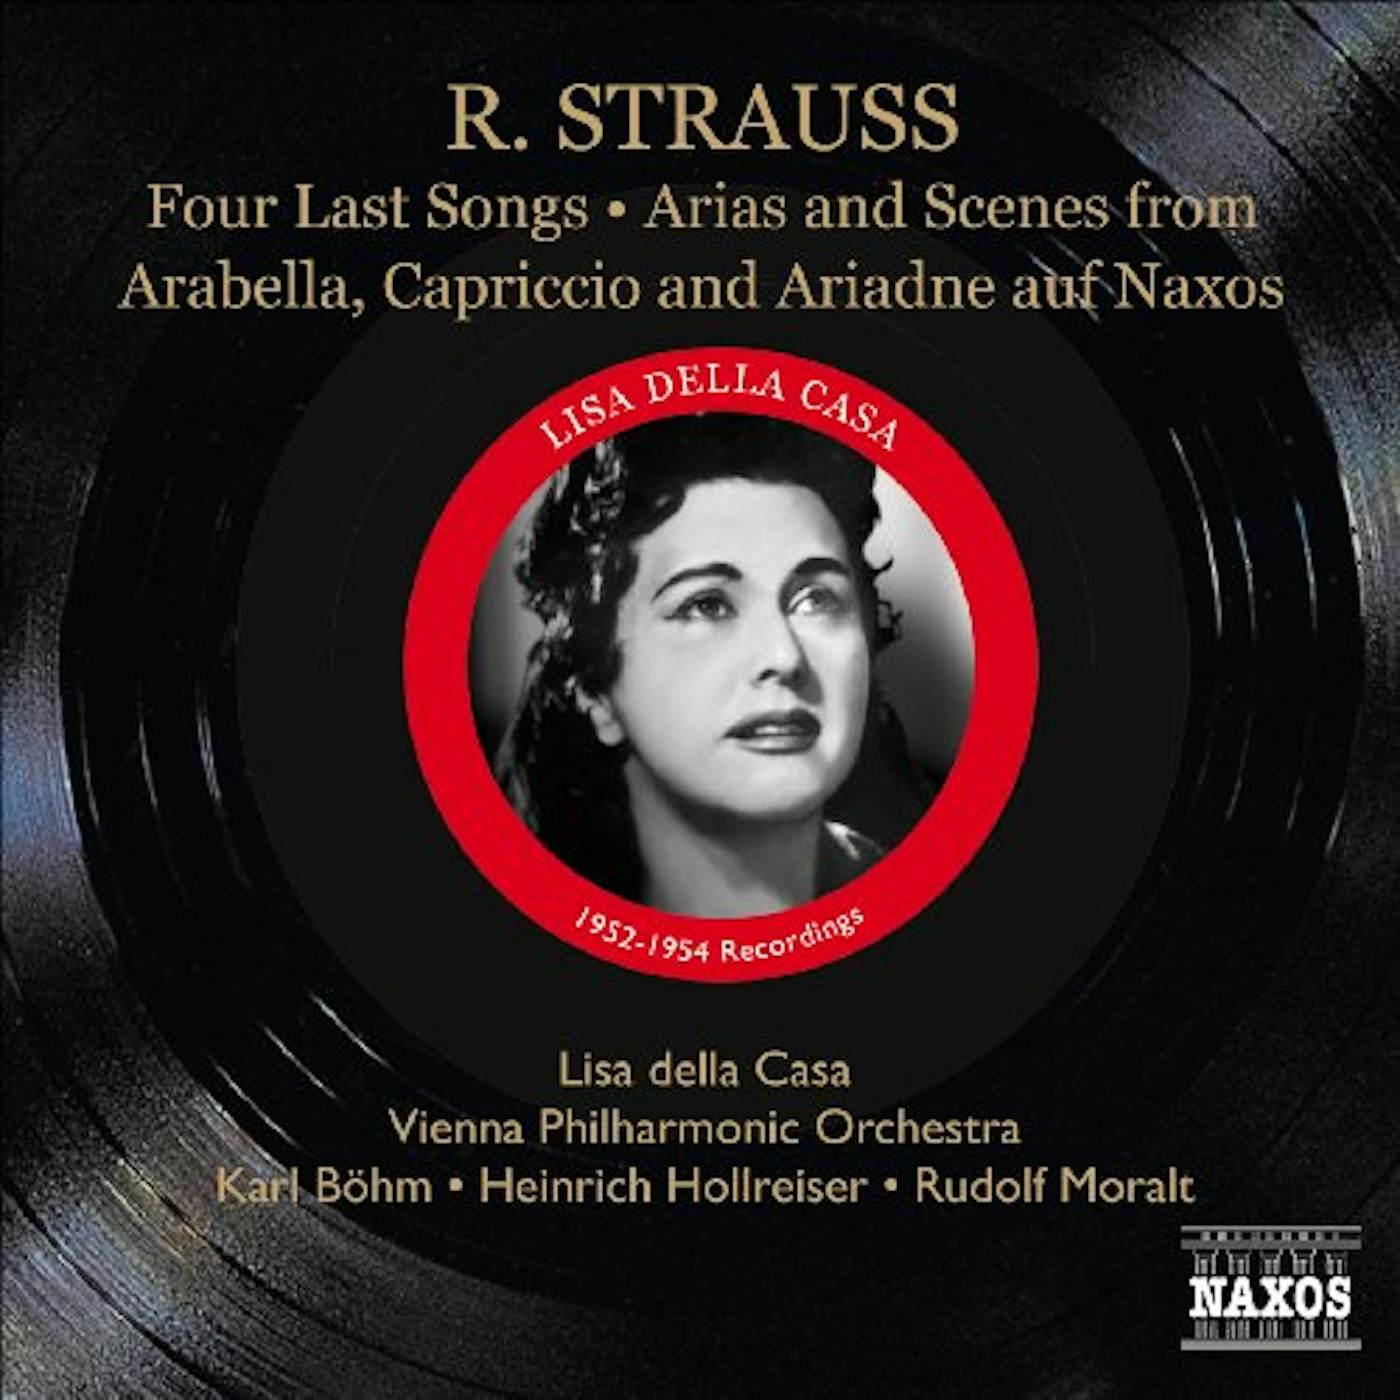 J. Strauss FYRA SISTA SANGER 1953 CD